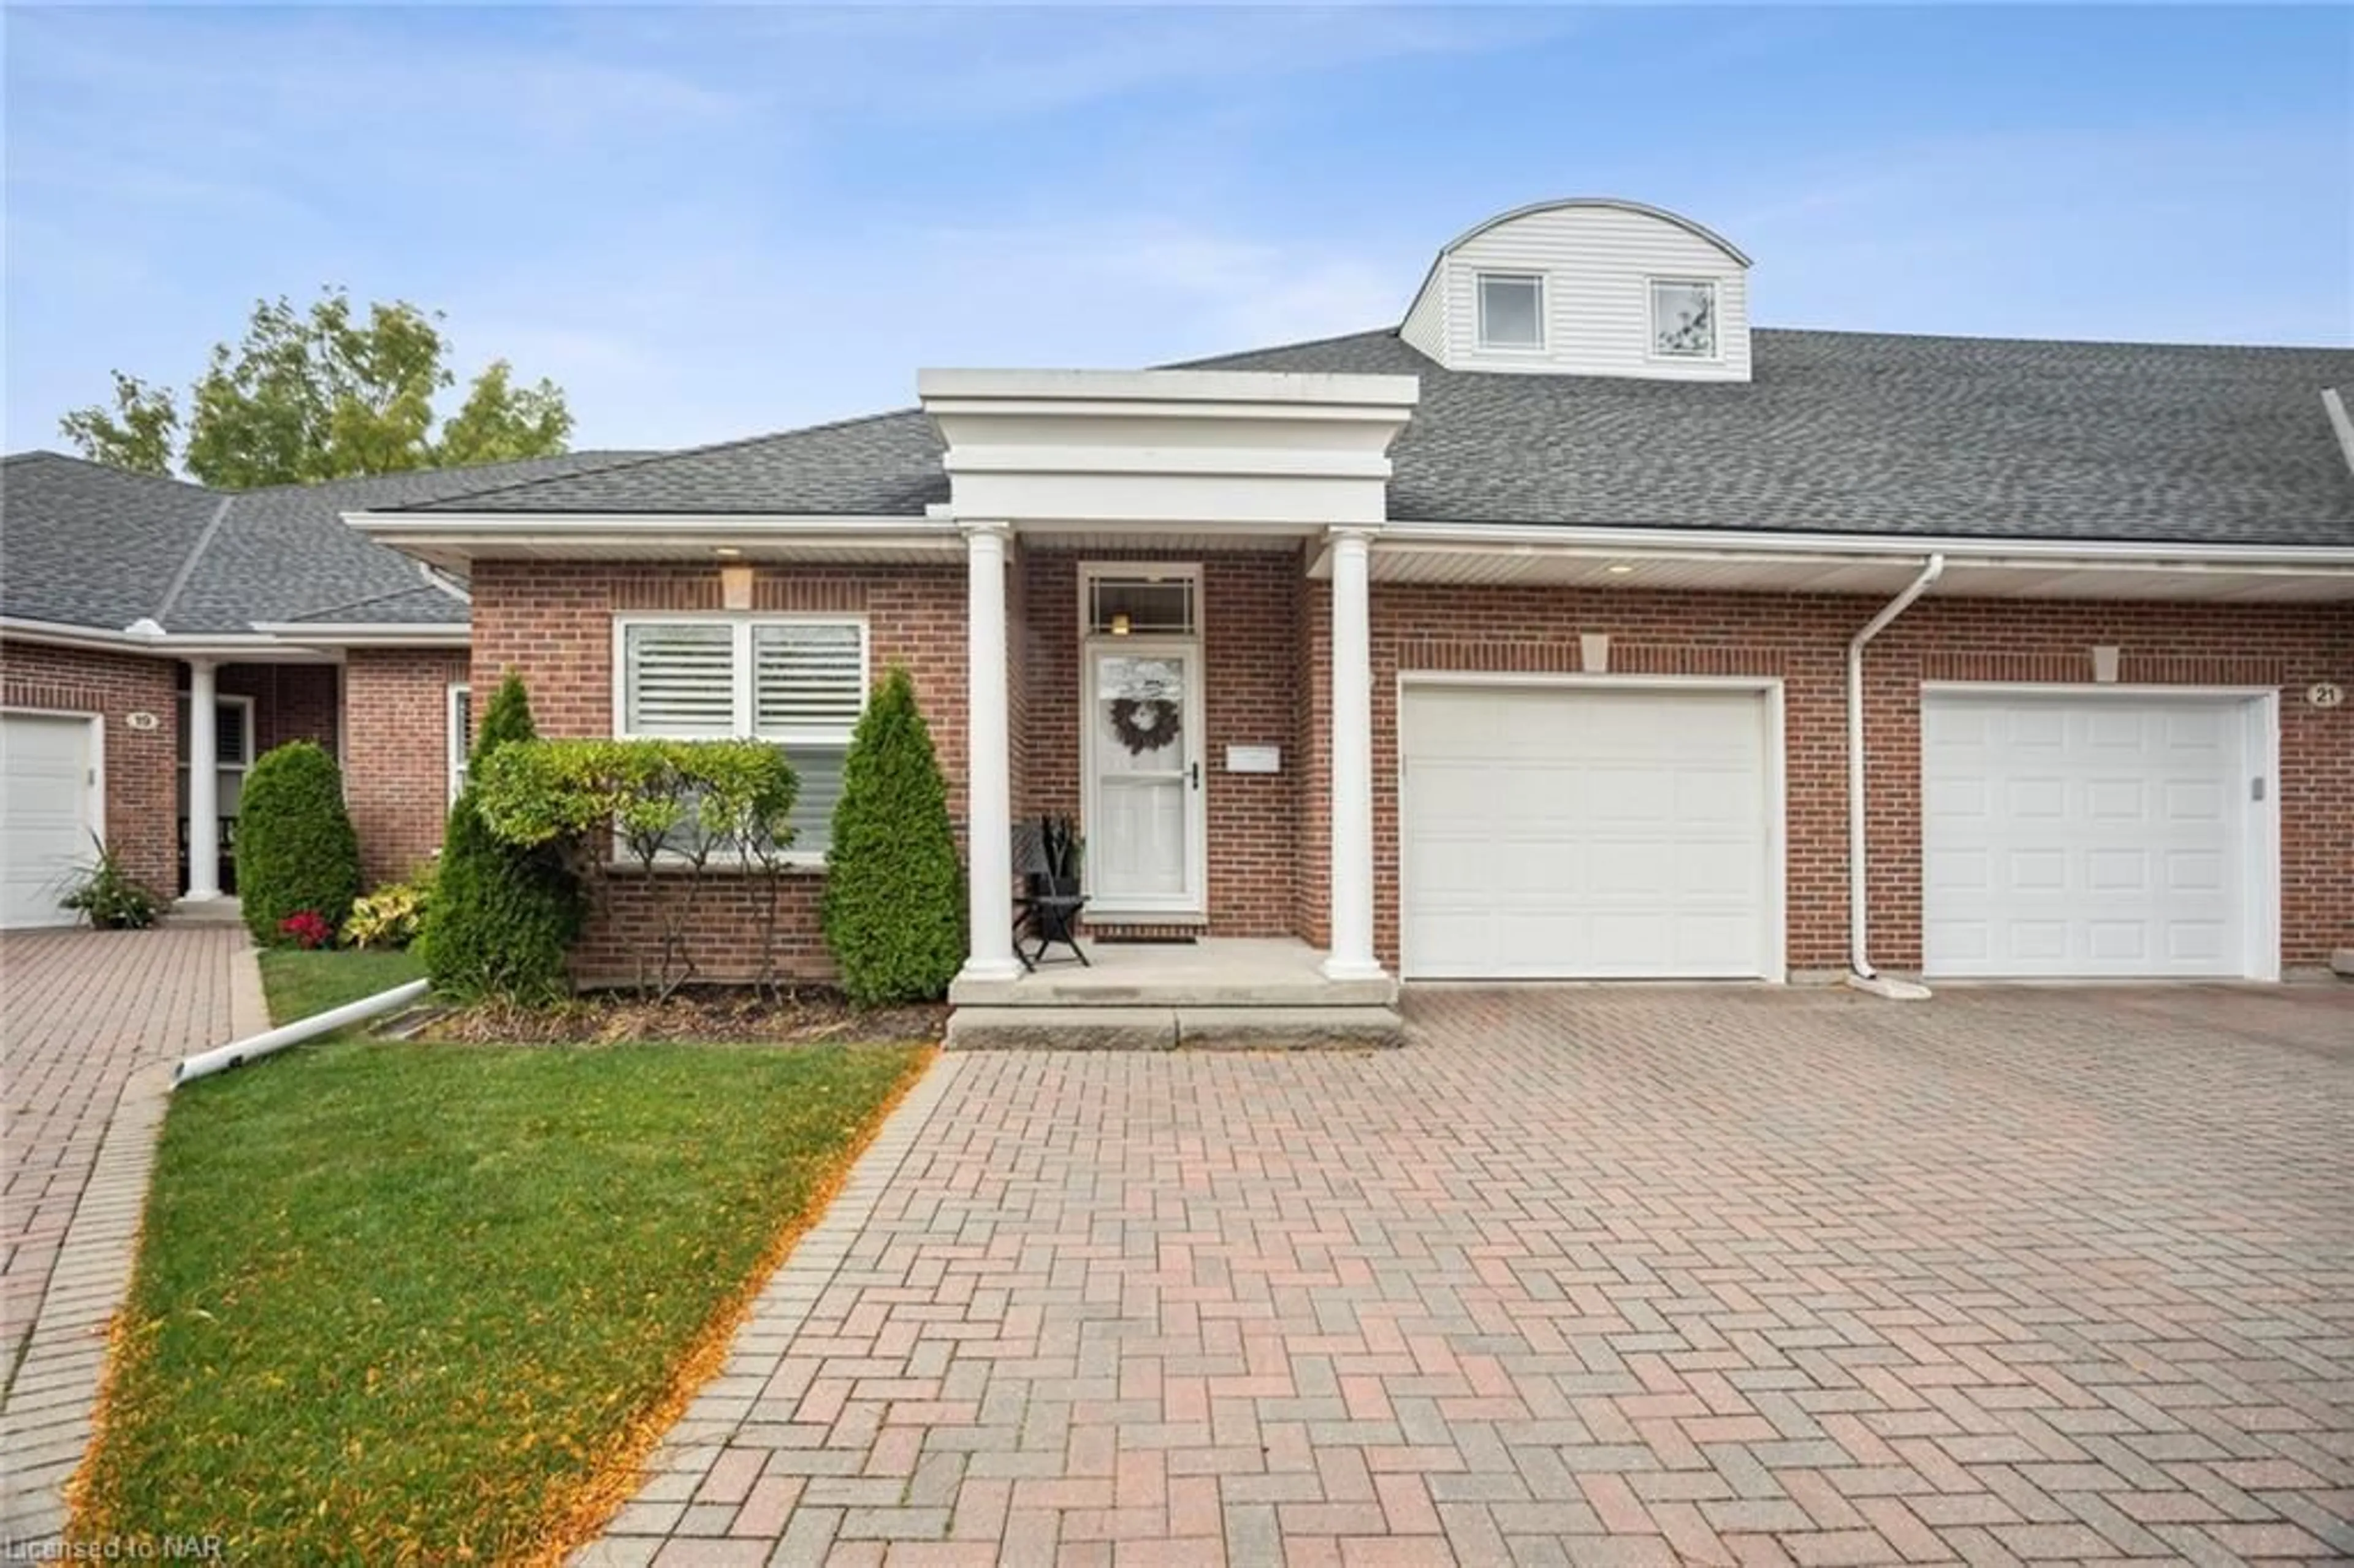 Home with brick exterior material for 3381 Montrose Rd #20, Niagara Falls Ontario L2H 0J9